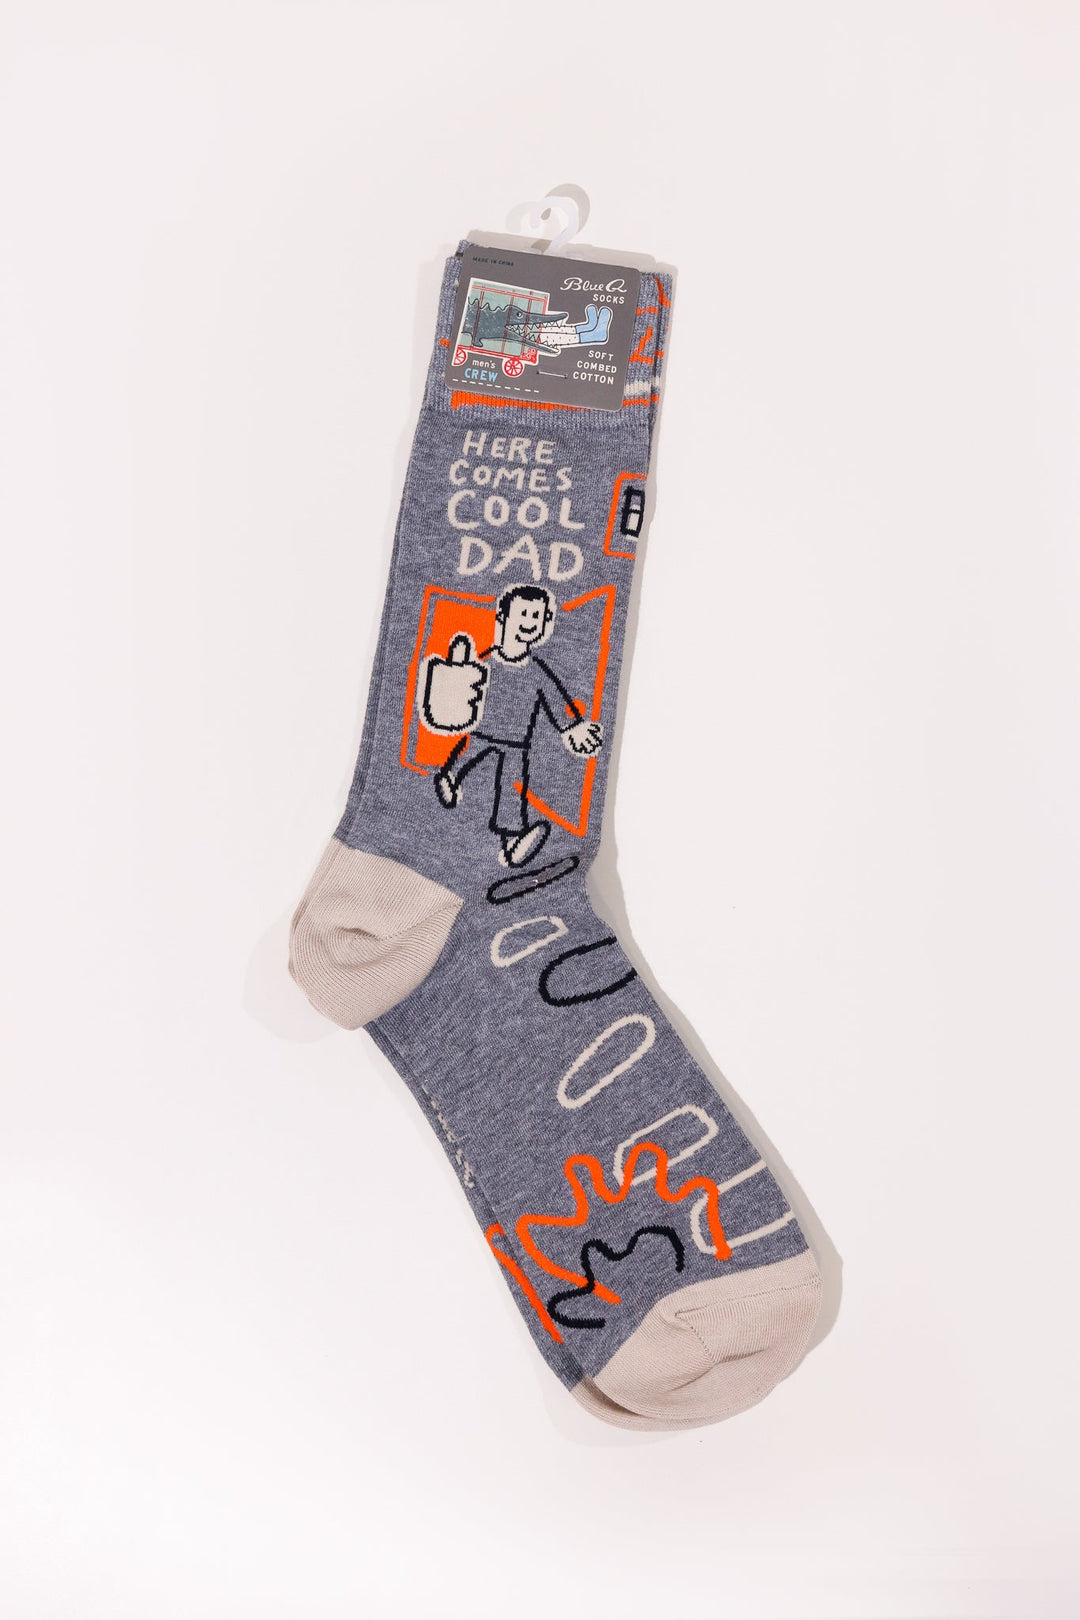 Here Comes Cool Dad Socks - Heyday Bozeman